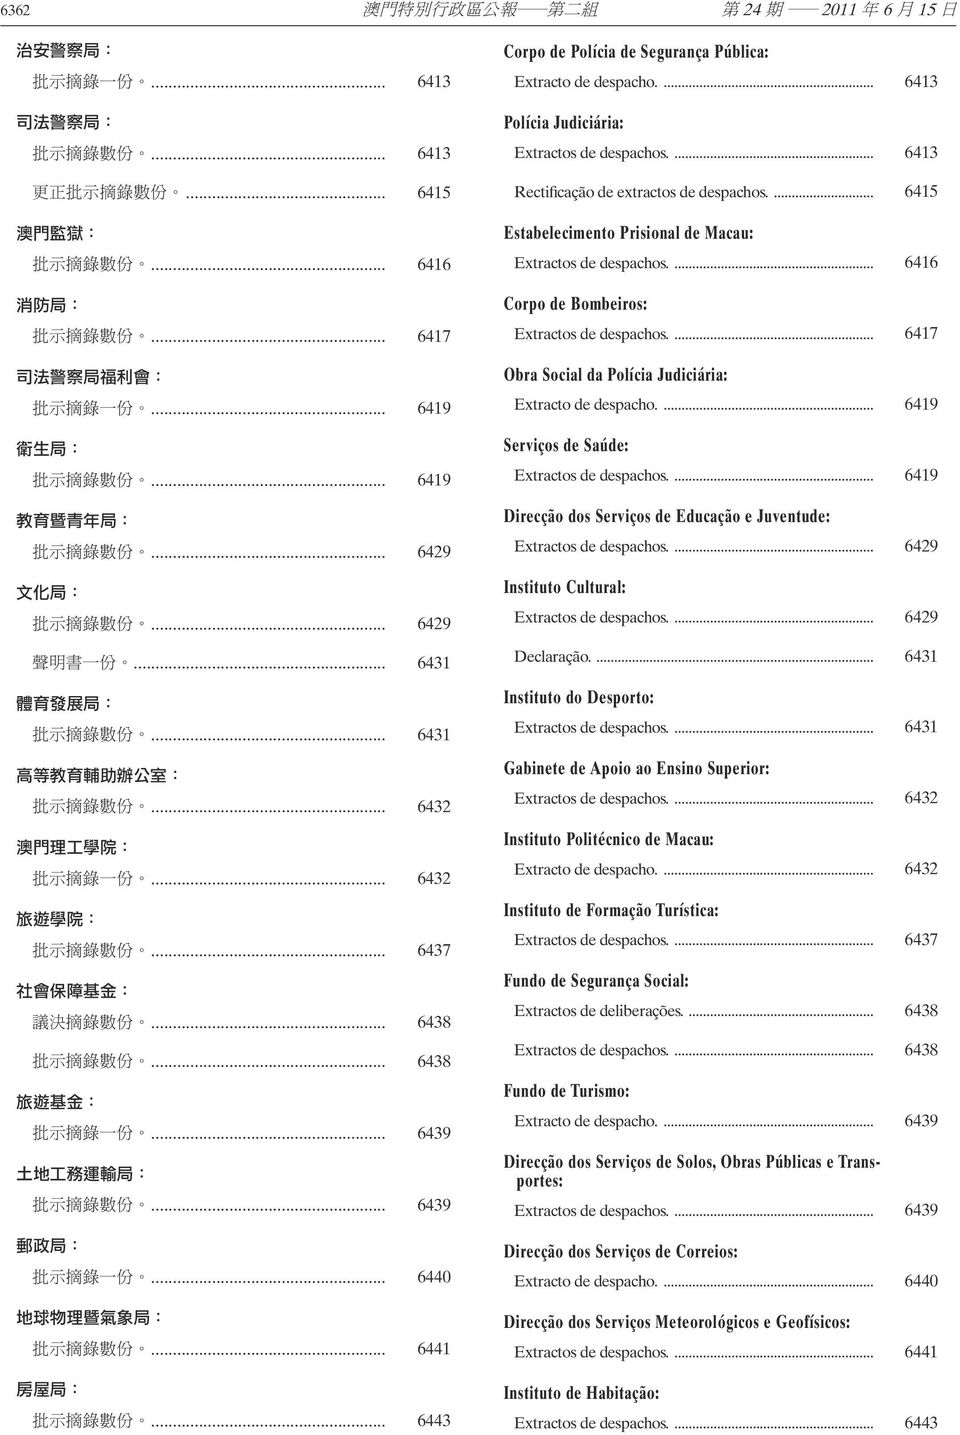 ... 6415 Estabelecimento Prisional de Macau: Extractos de despachos.... 6416 Corpo de Bombeiros: Extractos de despachos.... 6417 Obra Social da Polícia Judiciária: Extracto de despacho.